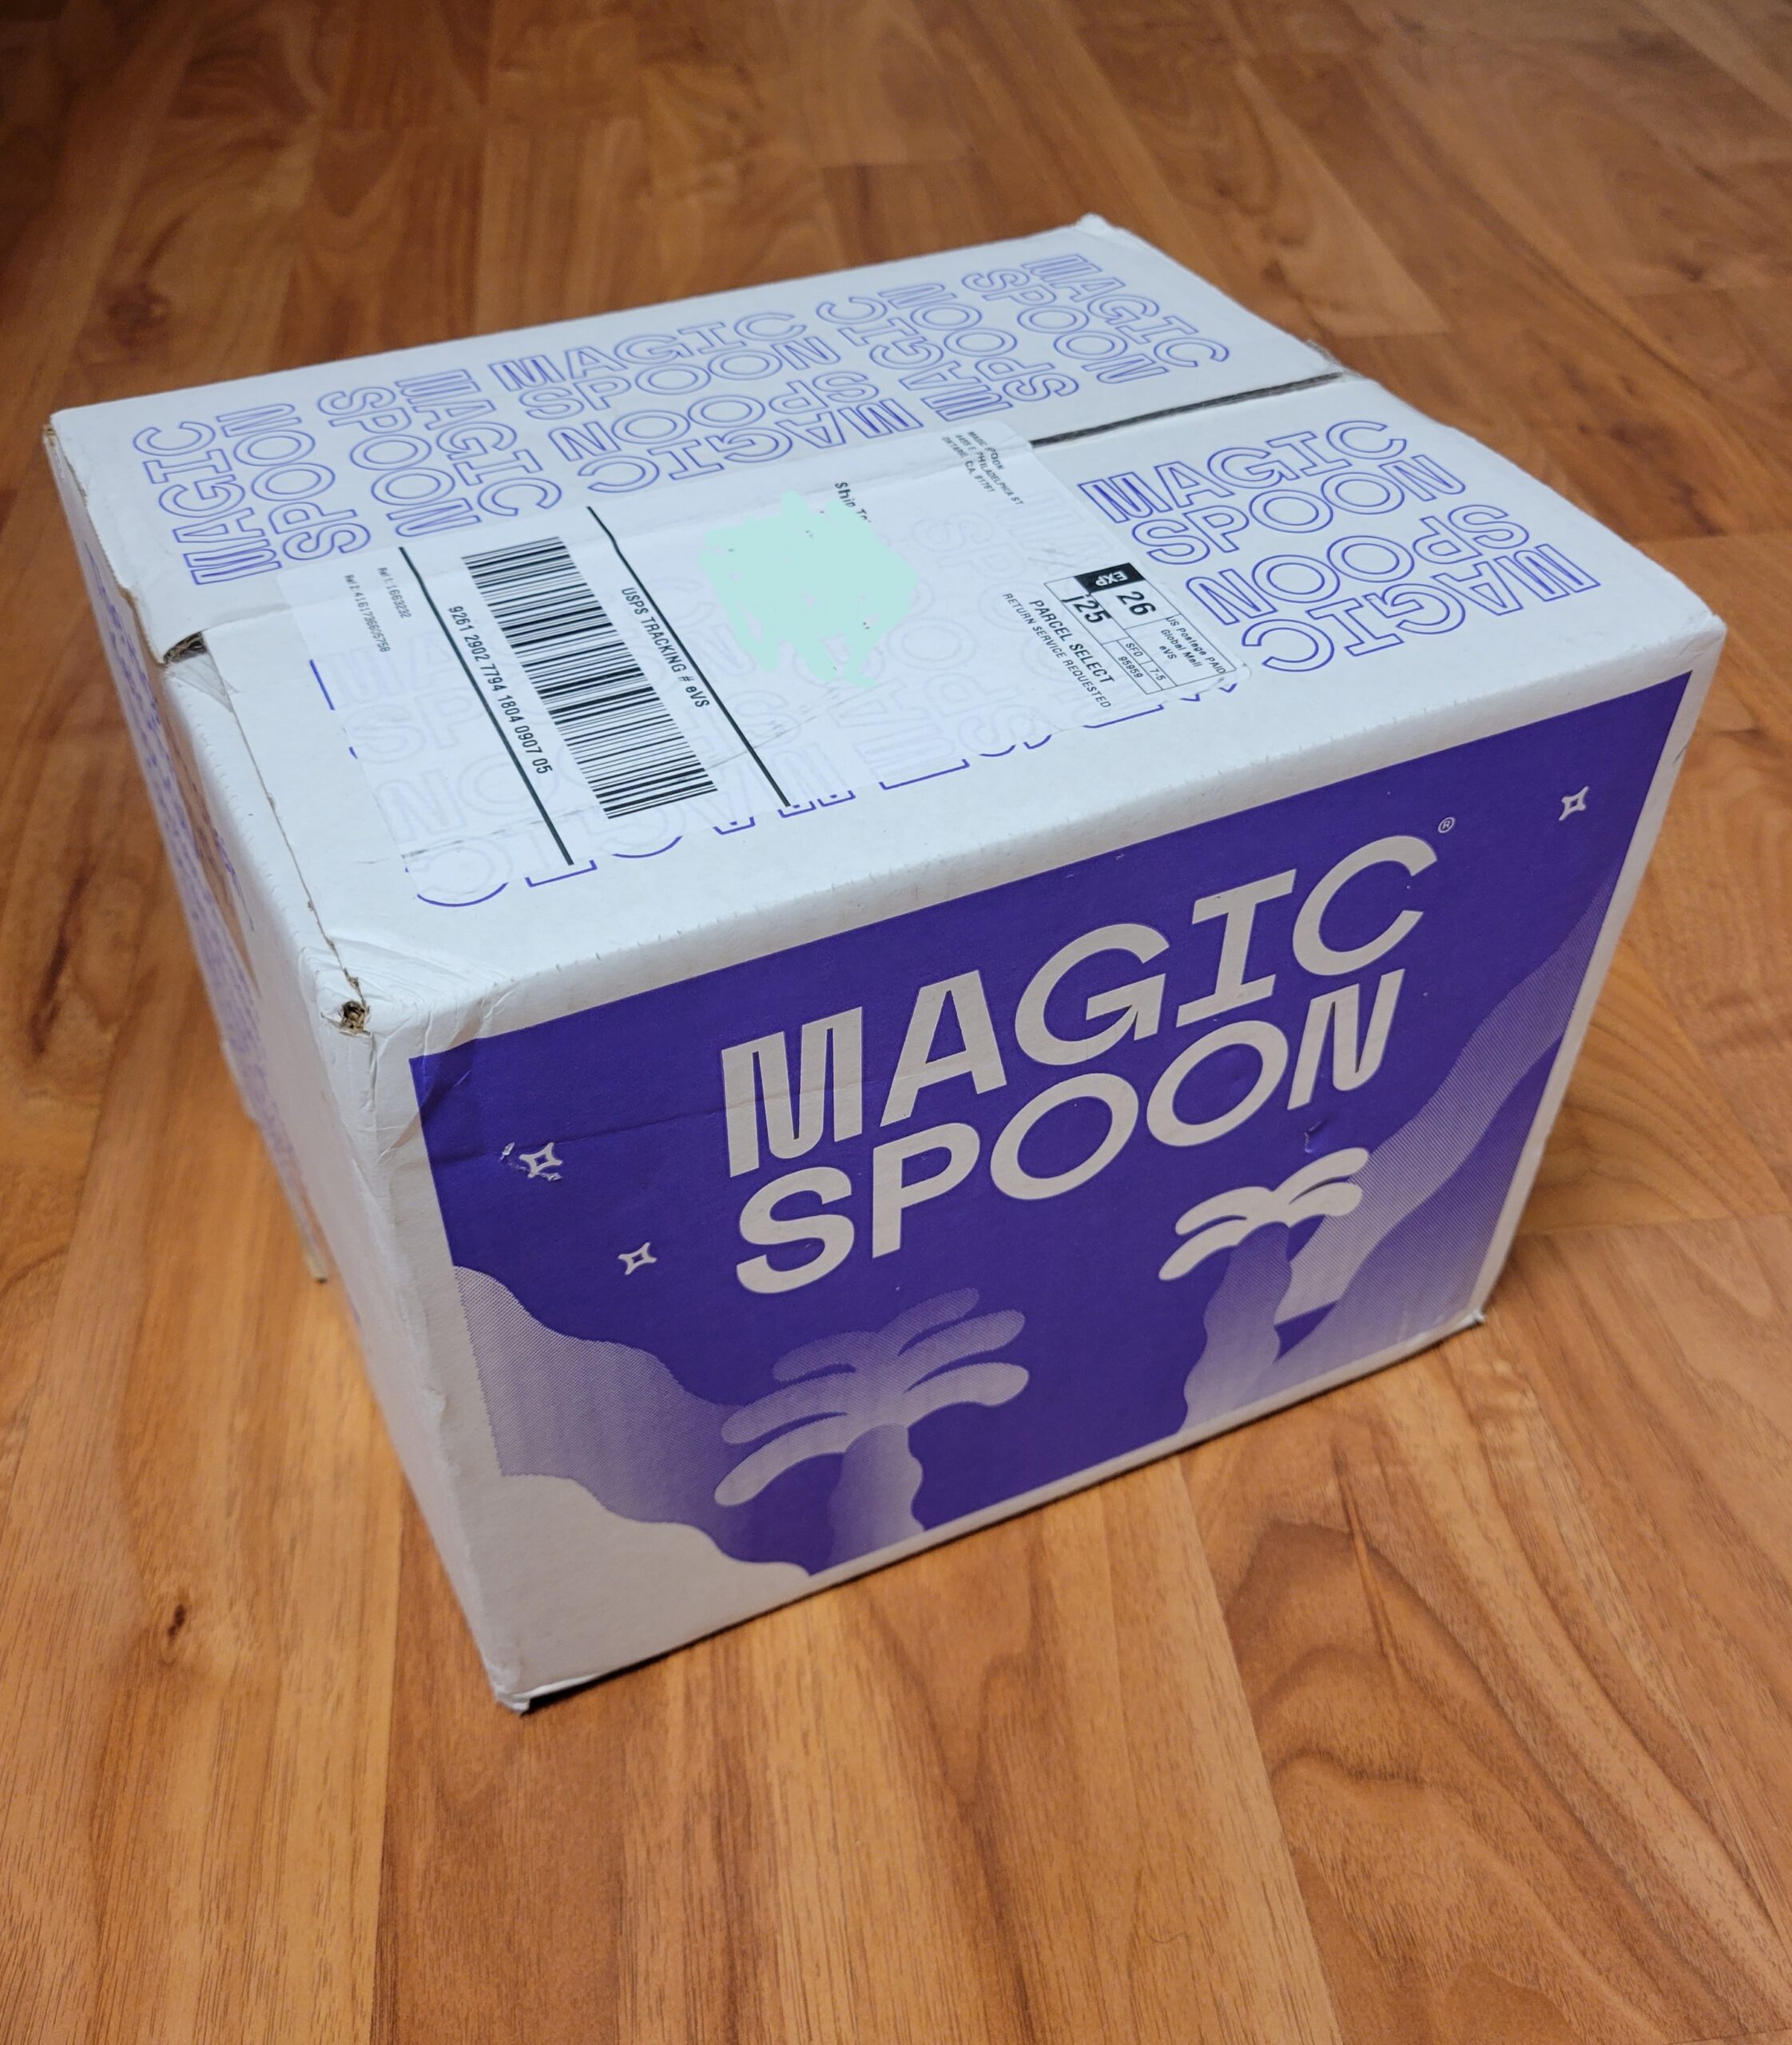 Magic-spoon-box-arrived